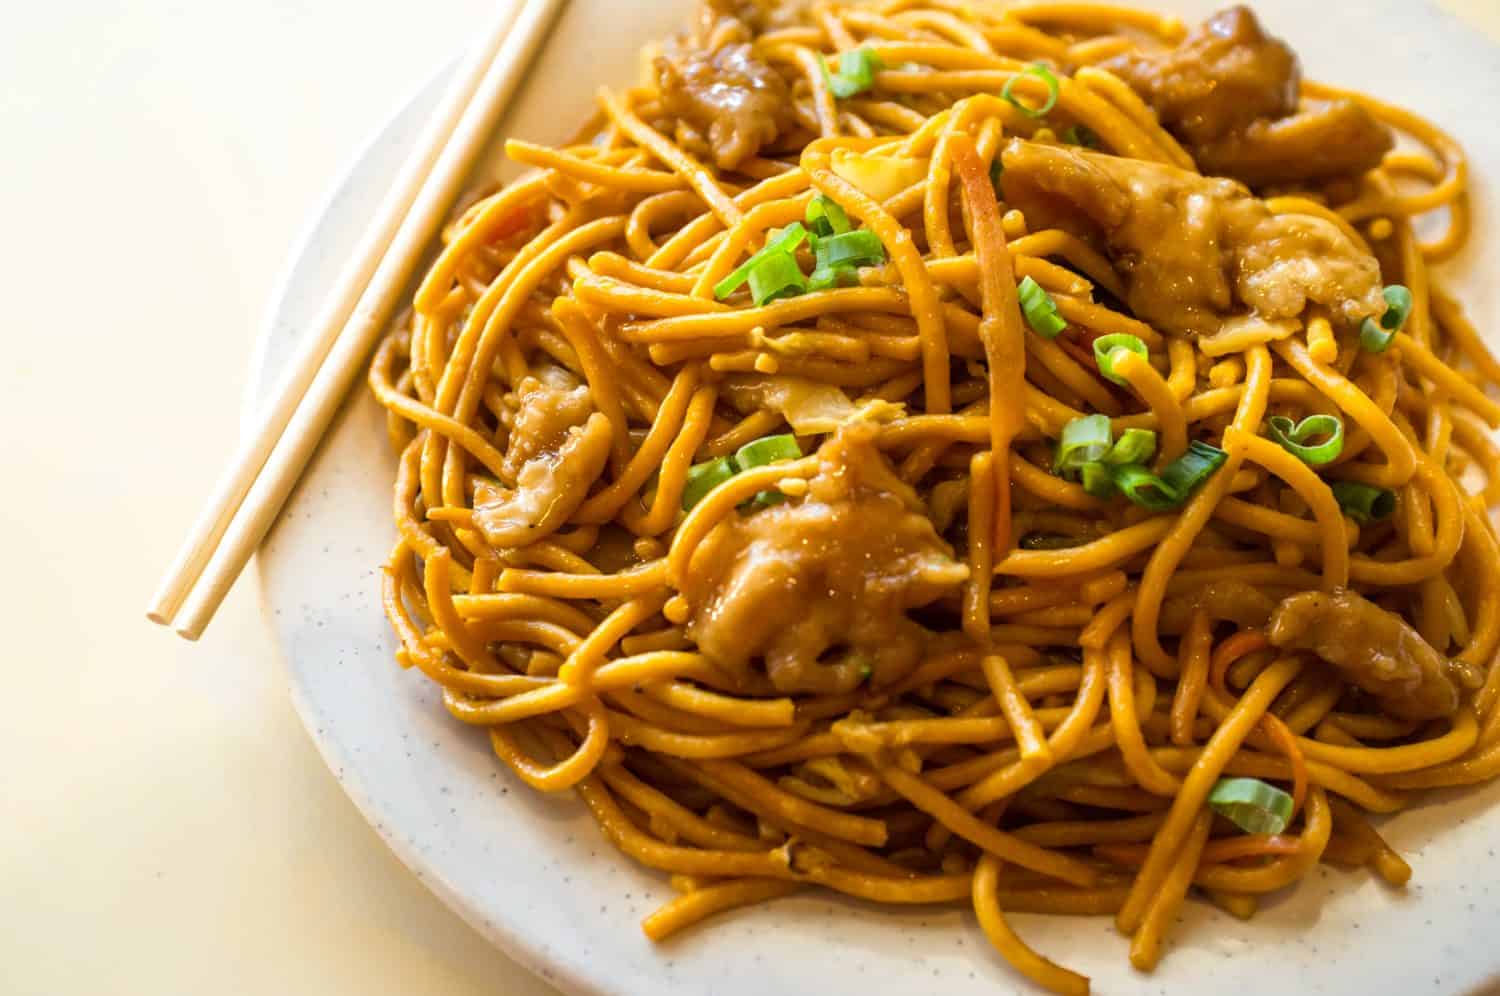 Chinese food tasty chicken lo mein noodles at restaurant